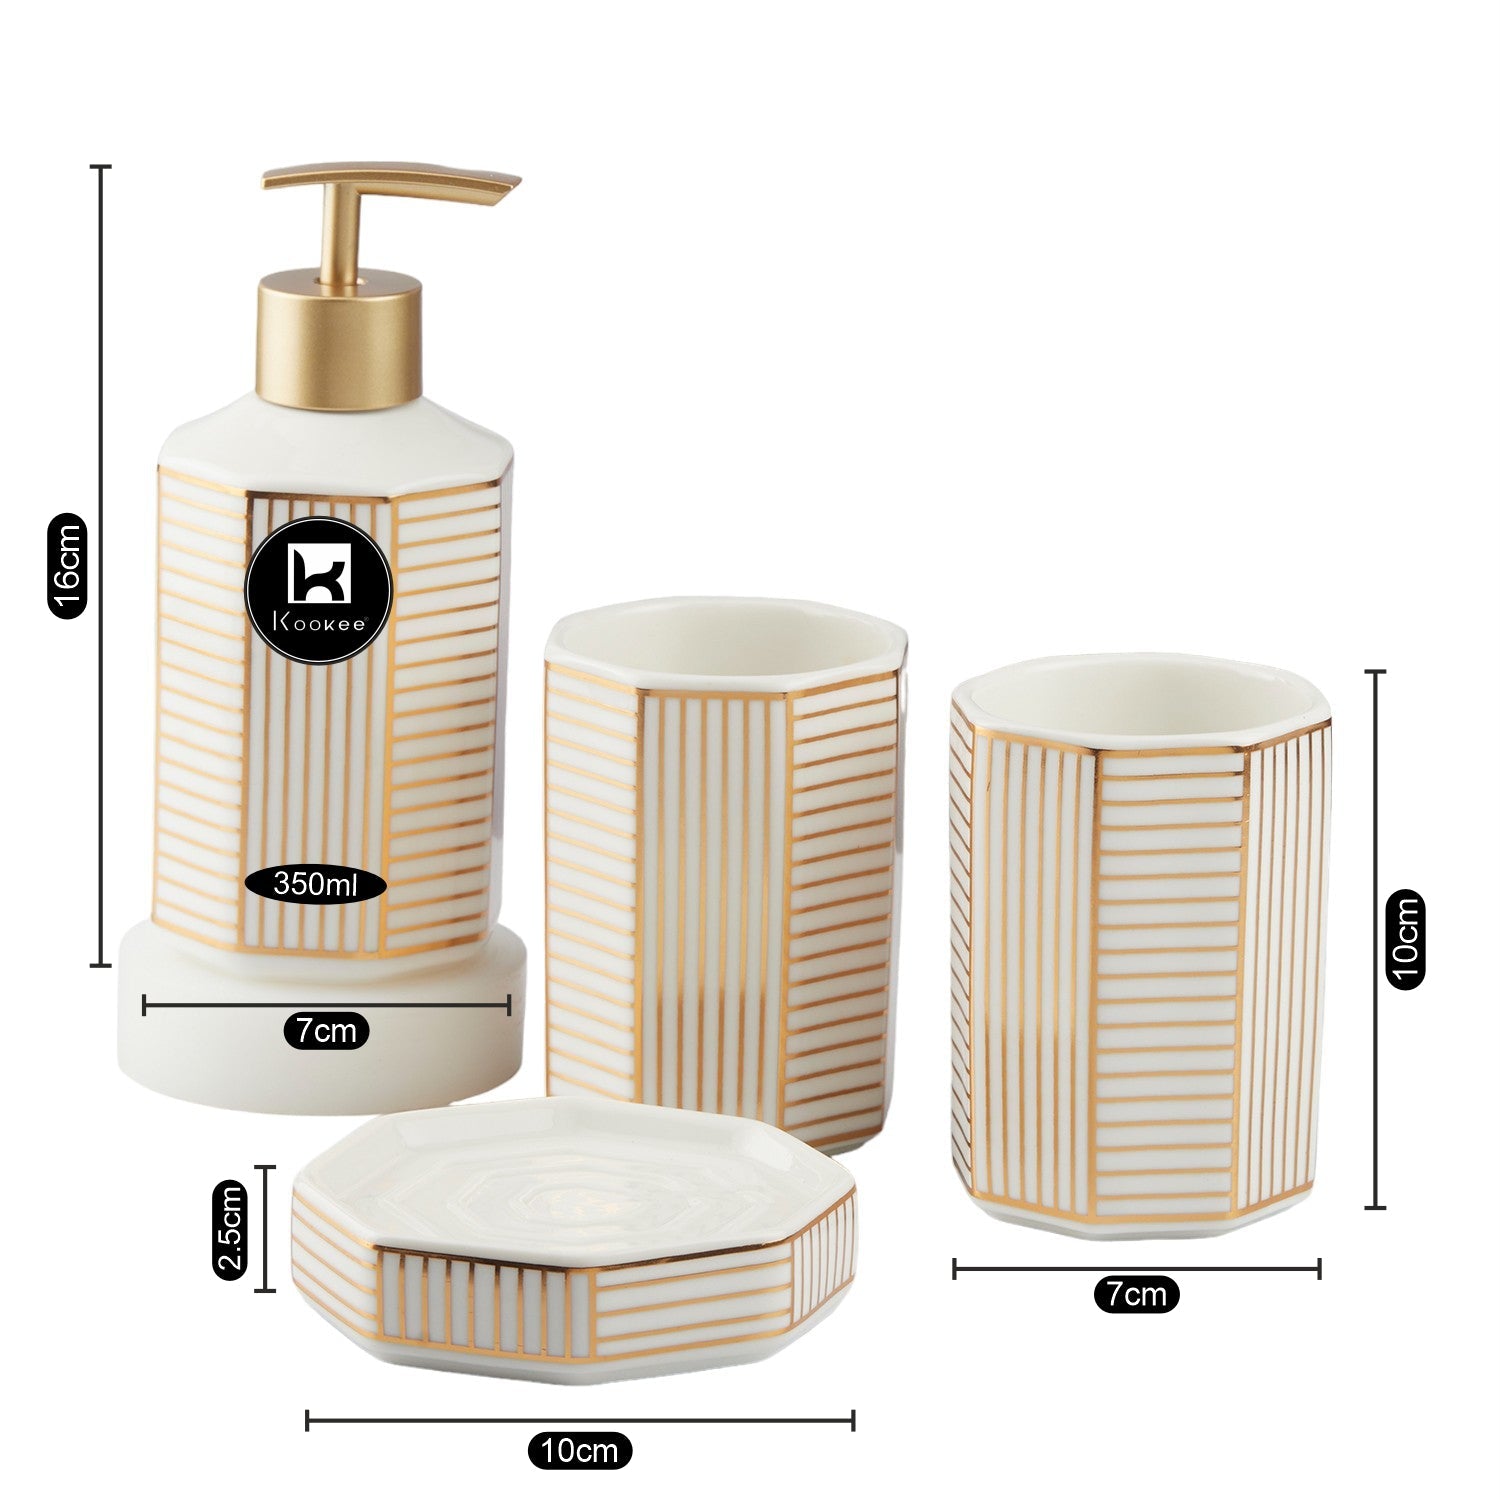 Ceramic Bathroom Set of 4 with Soap Dispenser (10388)